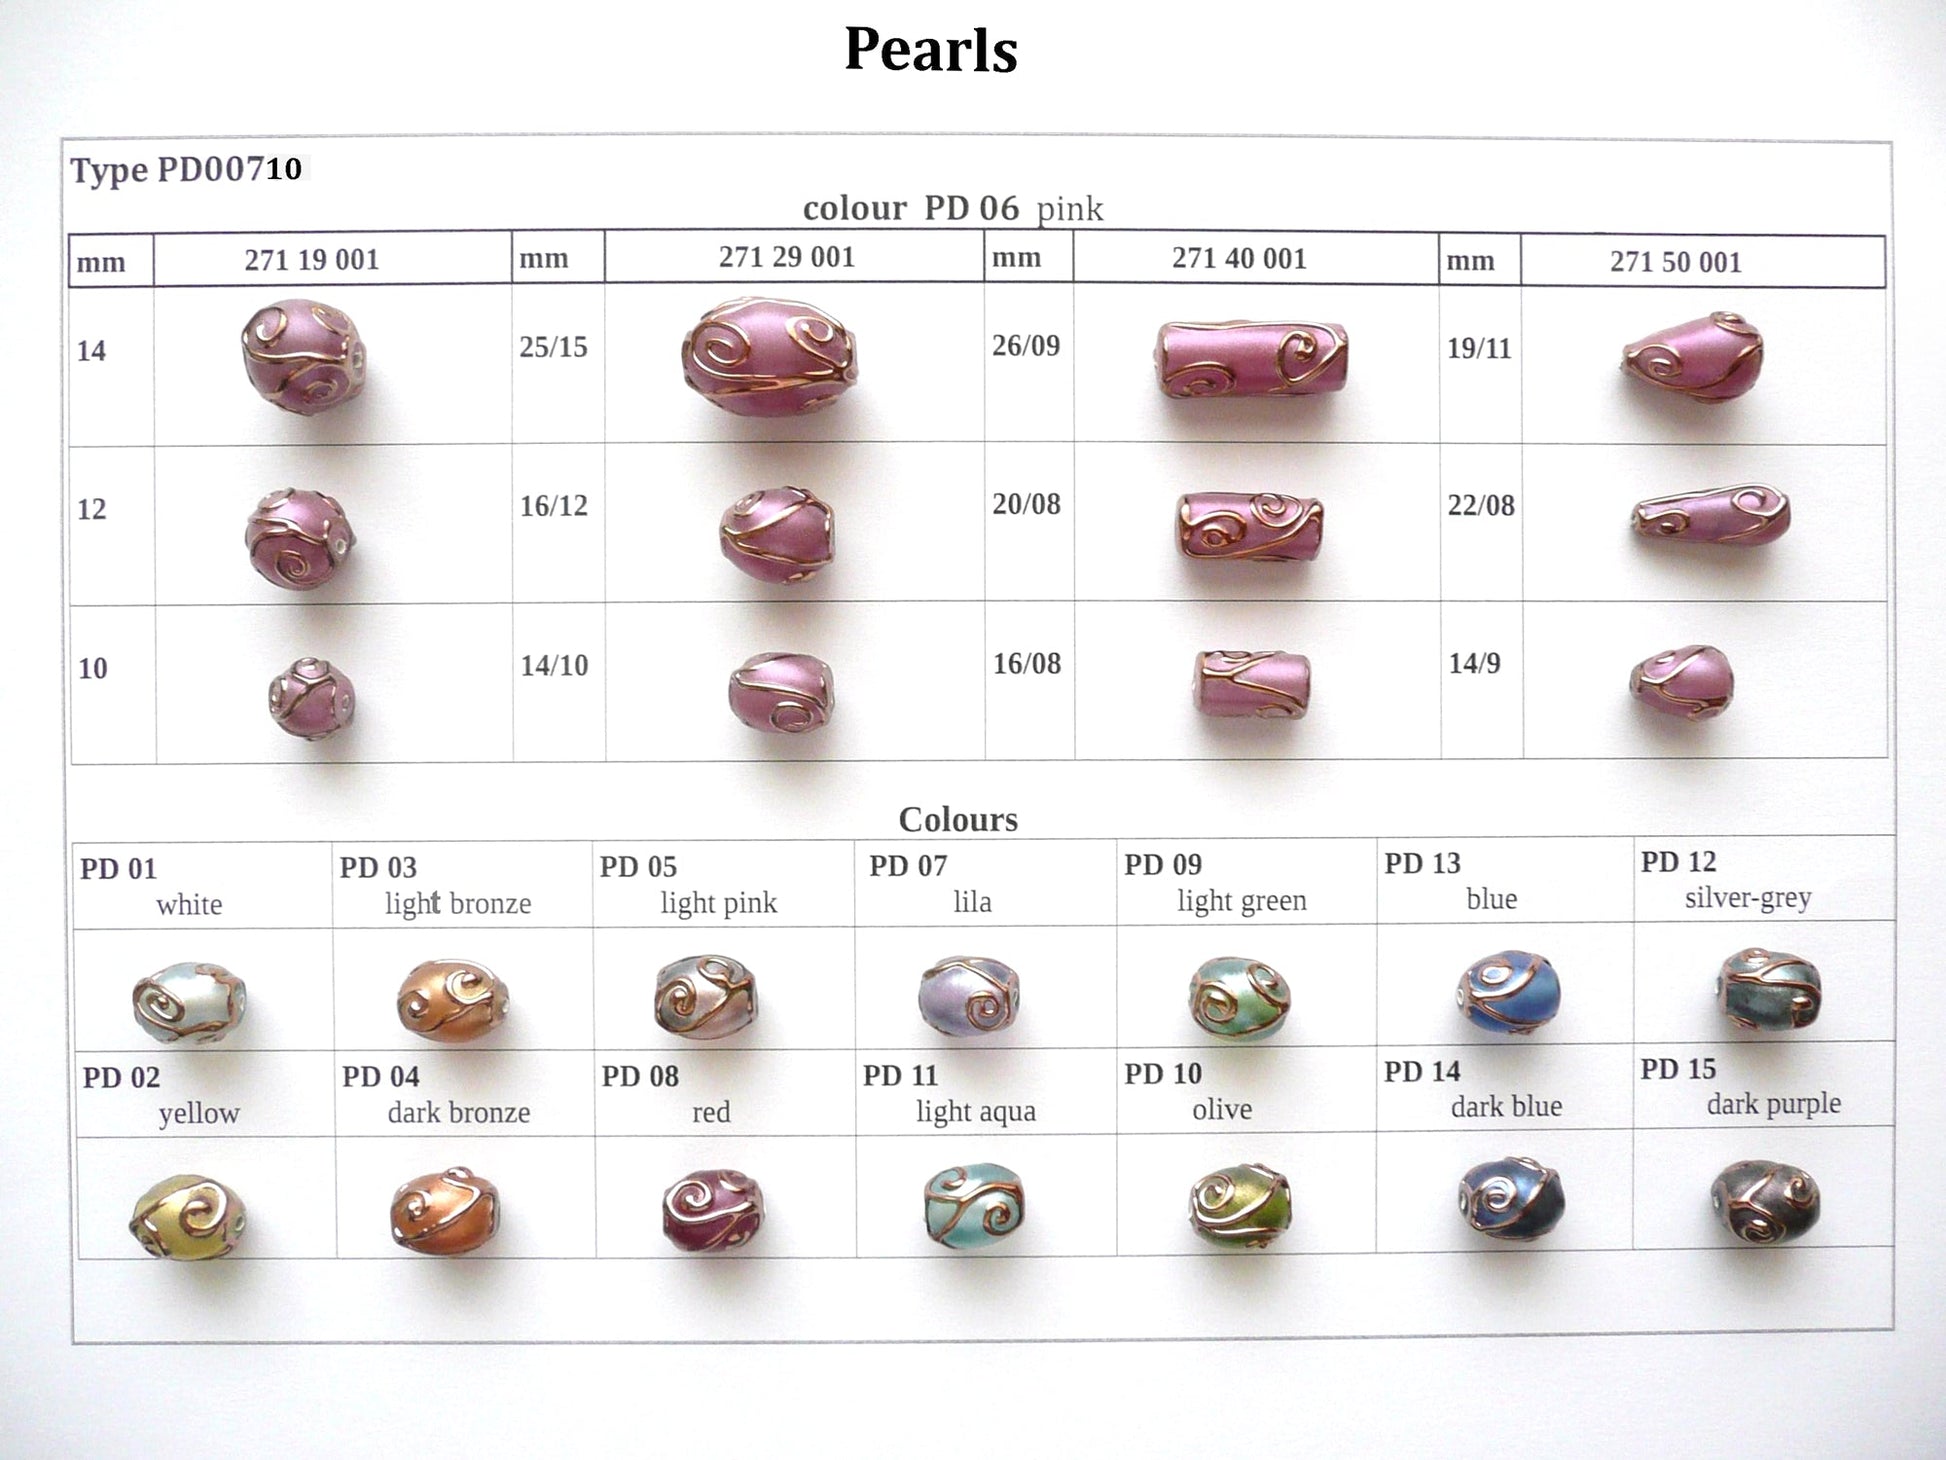 30 pcs Lampwork Beads Pearl Decor PD710 / Round (271-19-001), Handmade, Preciosa Glass, Czech Republic